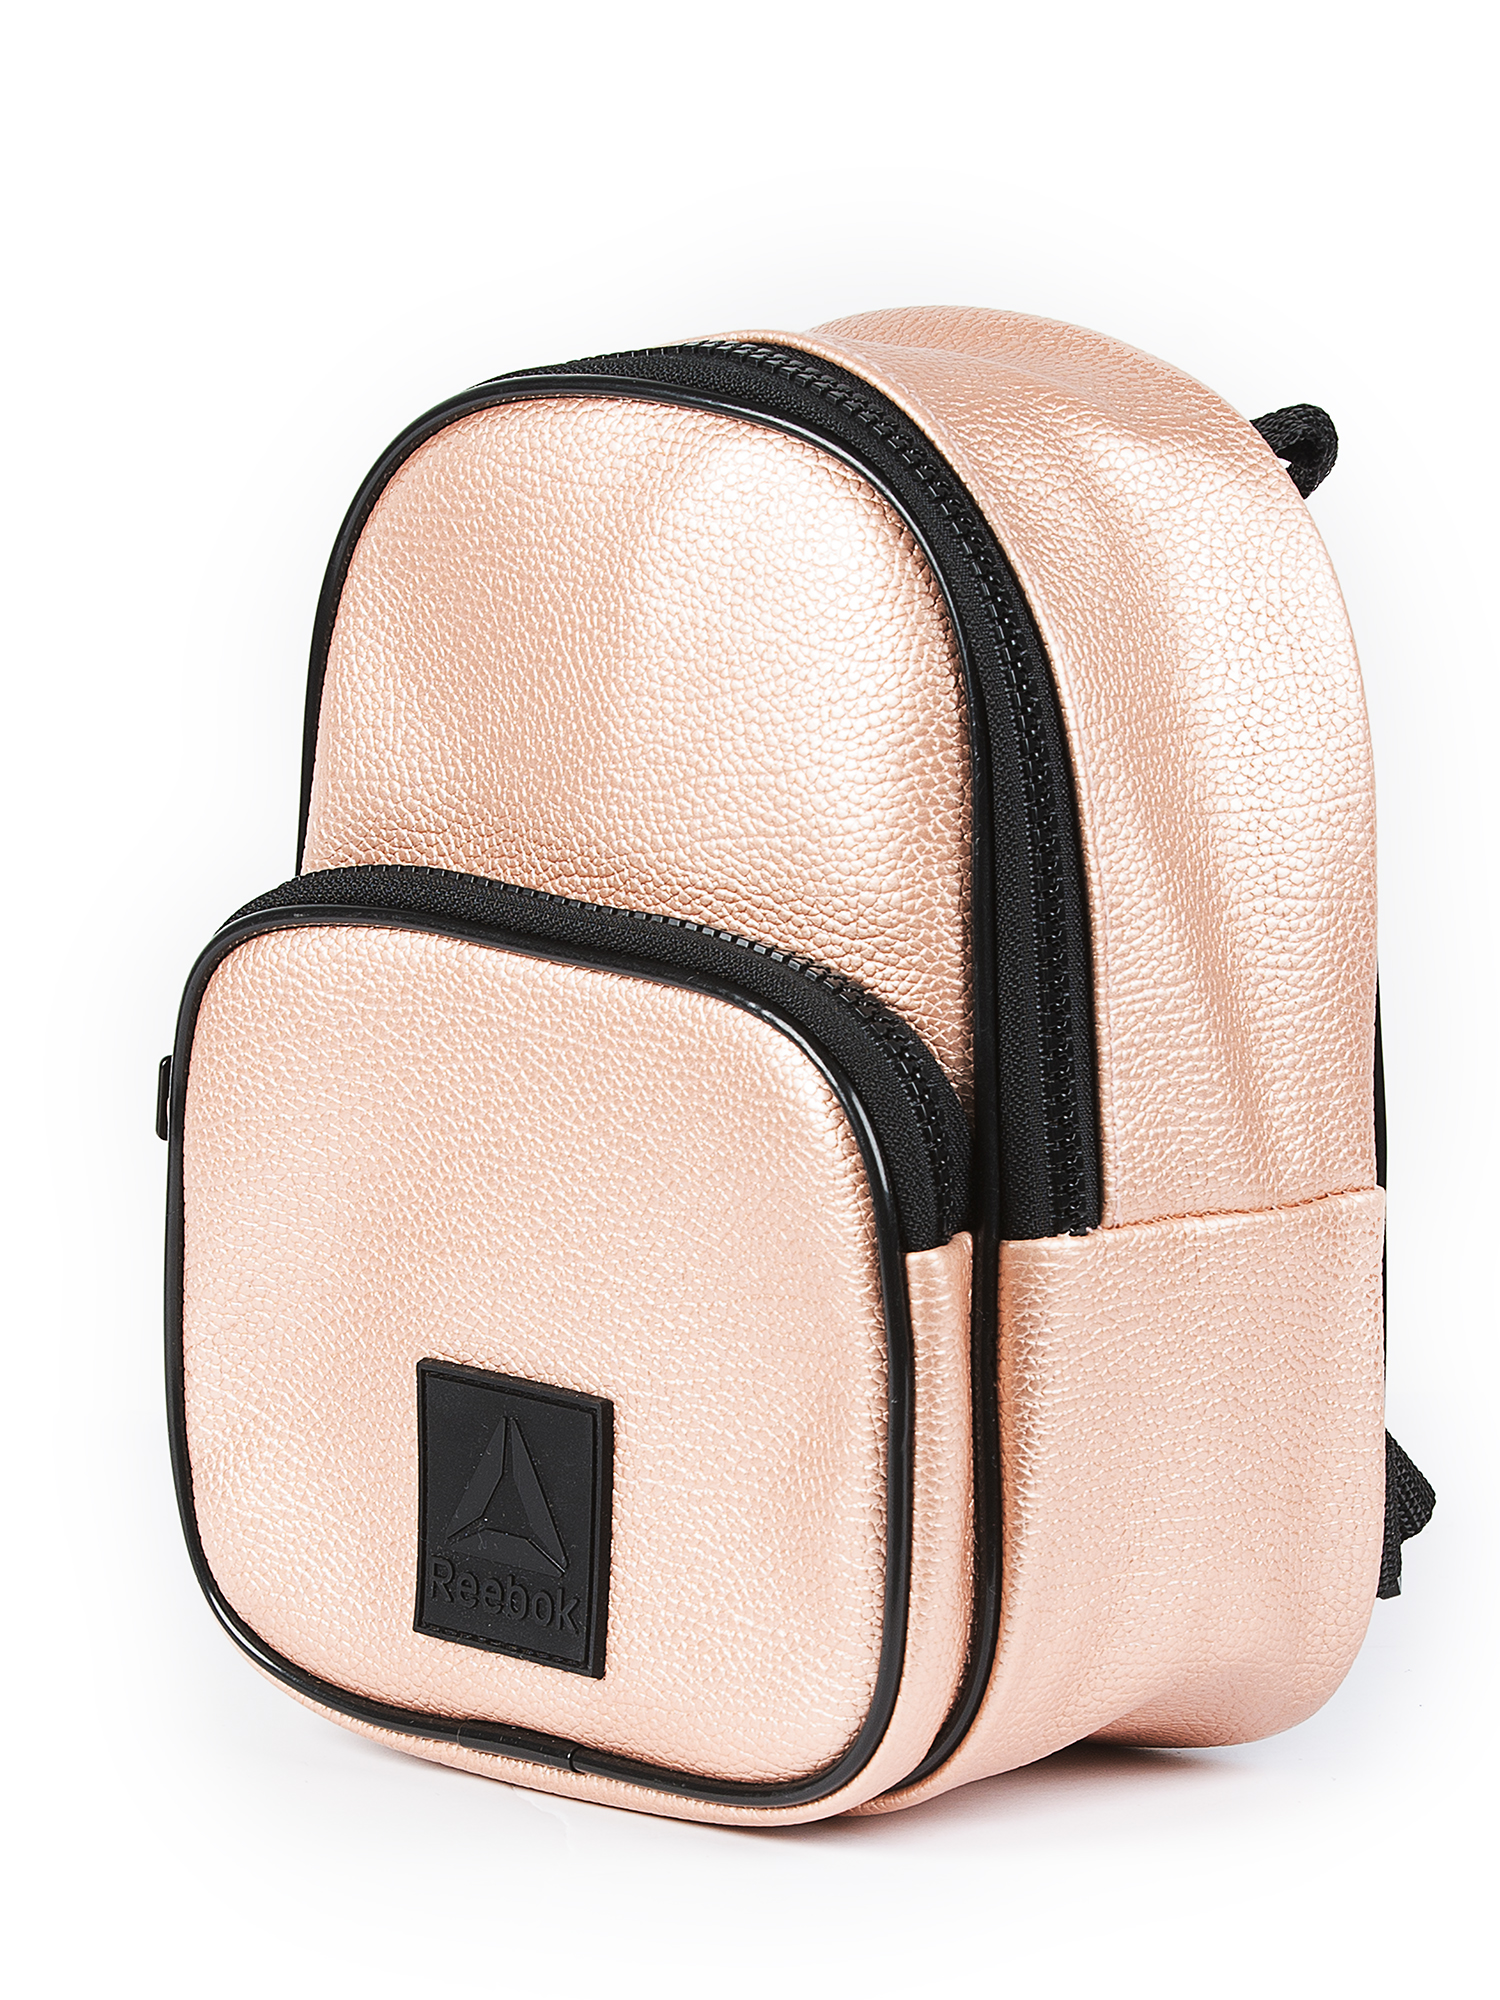 Reebok Classic Women's Mini Backpack Gold - image 1 of 4